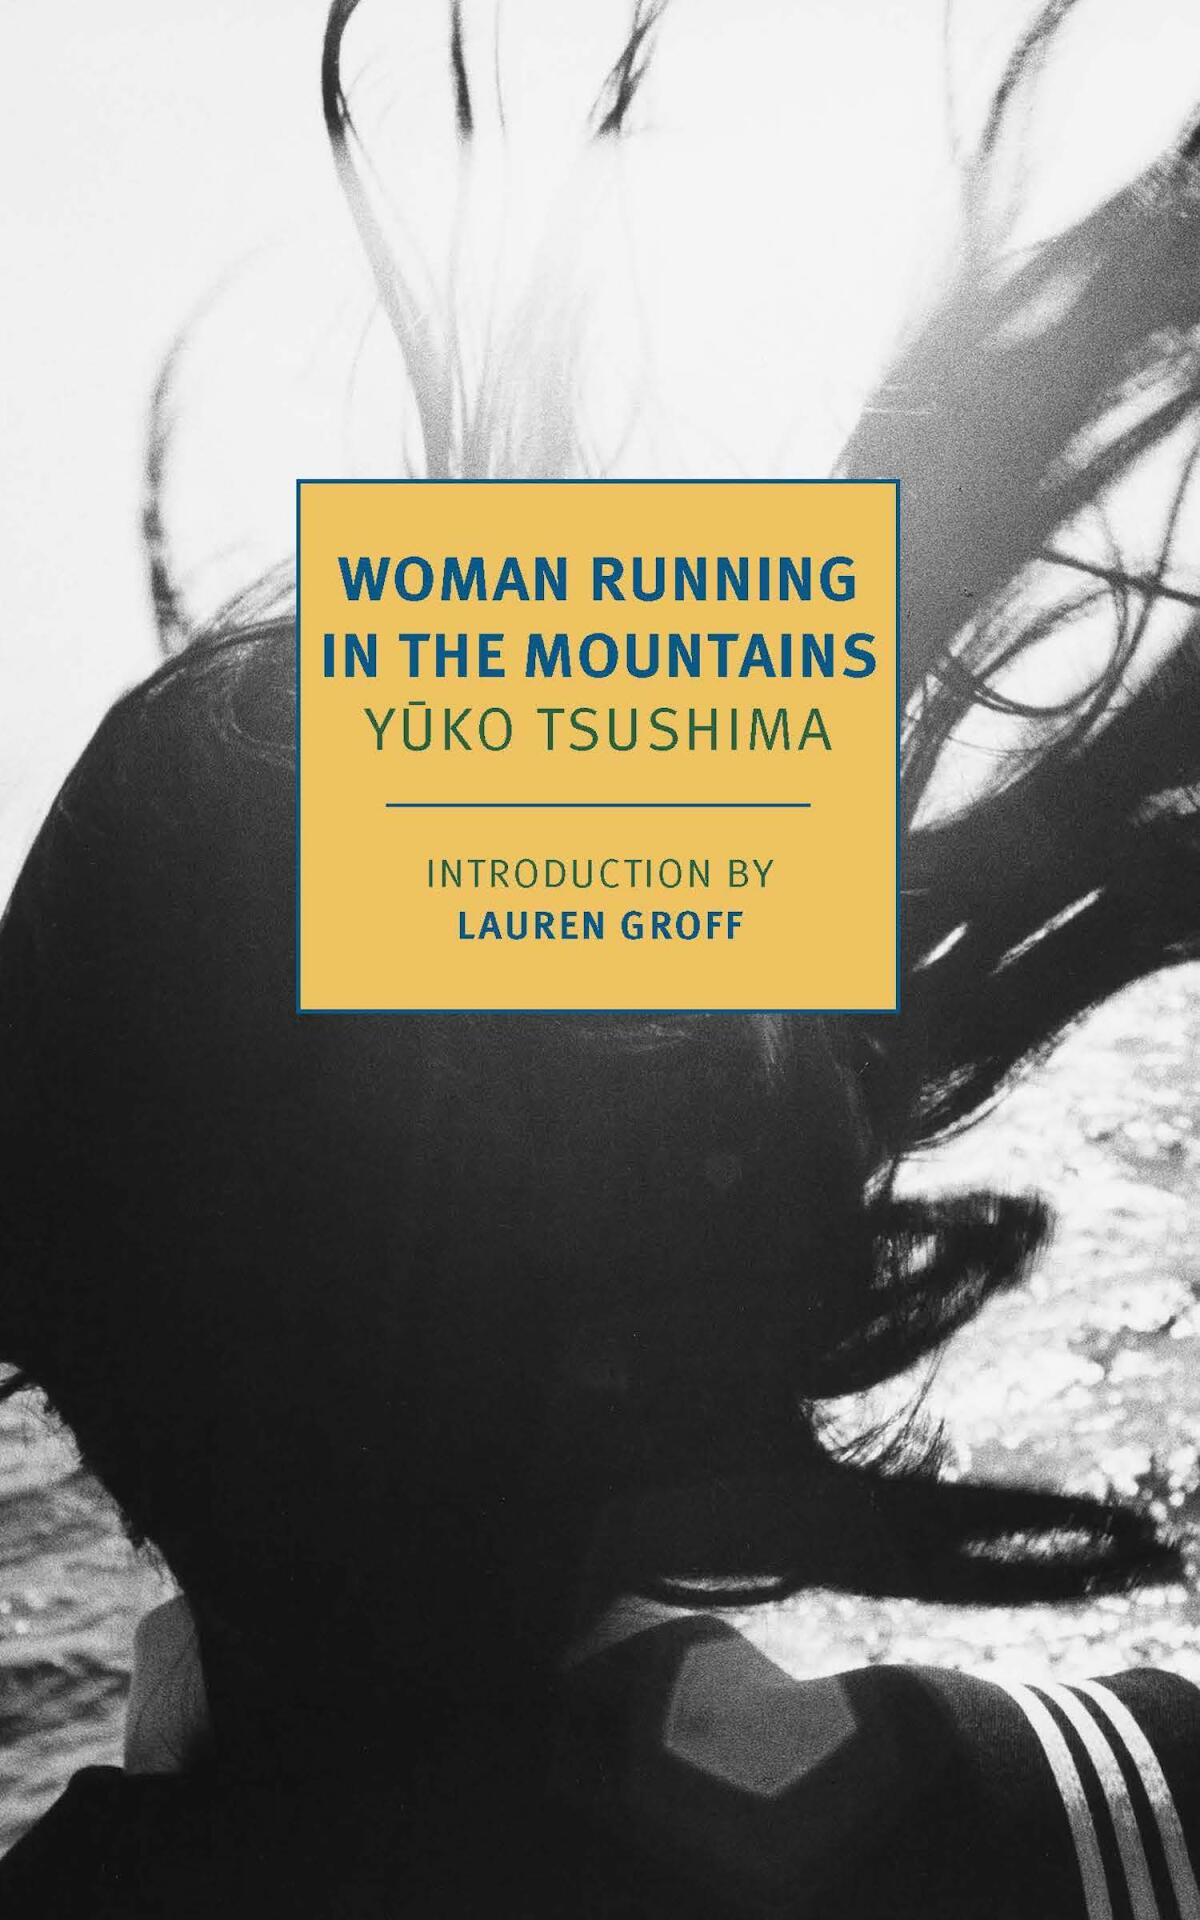 "Woman Running in the Mountains," by Yuko Tsushima